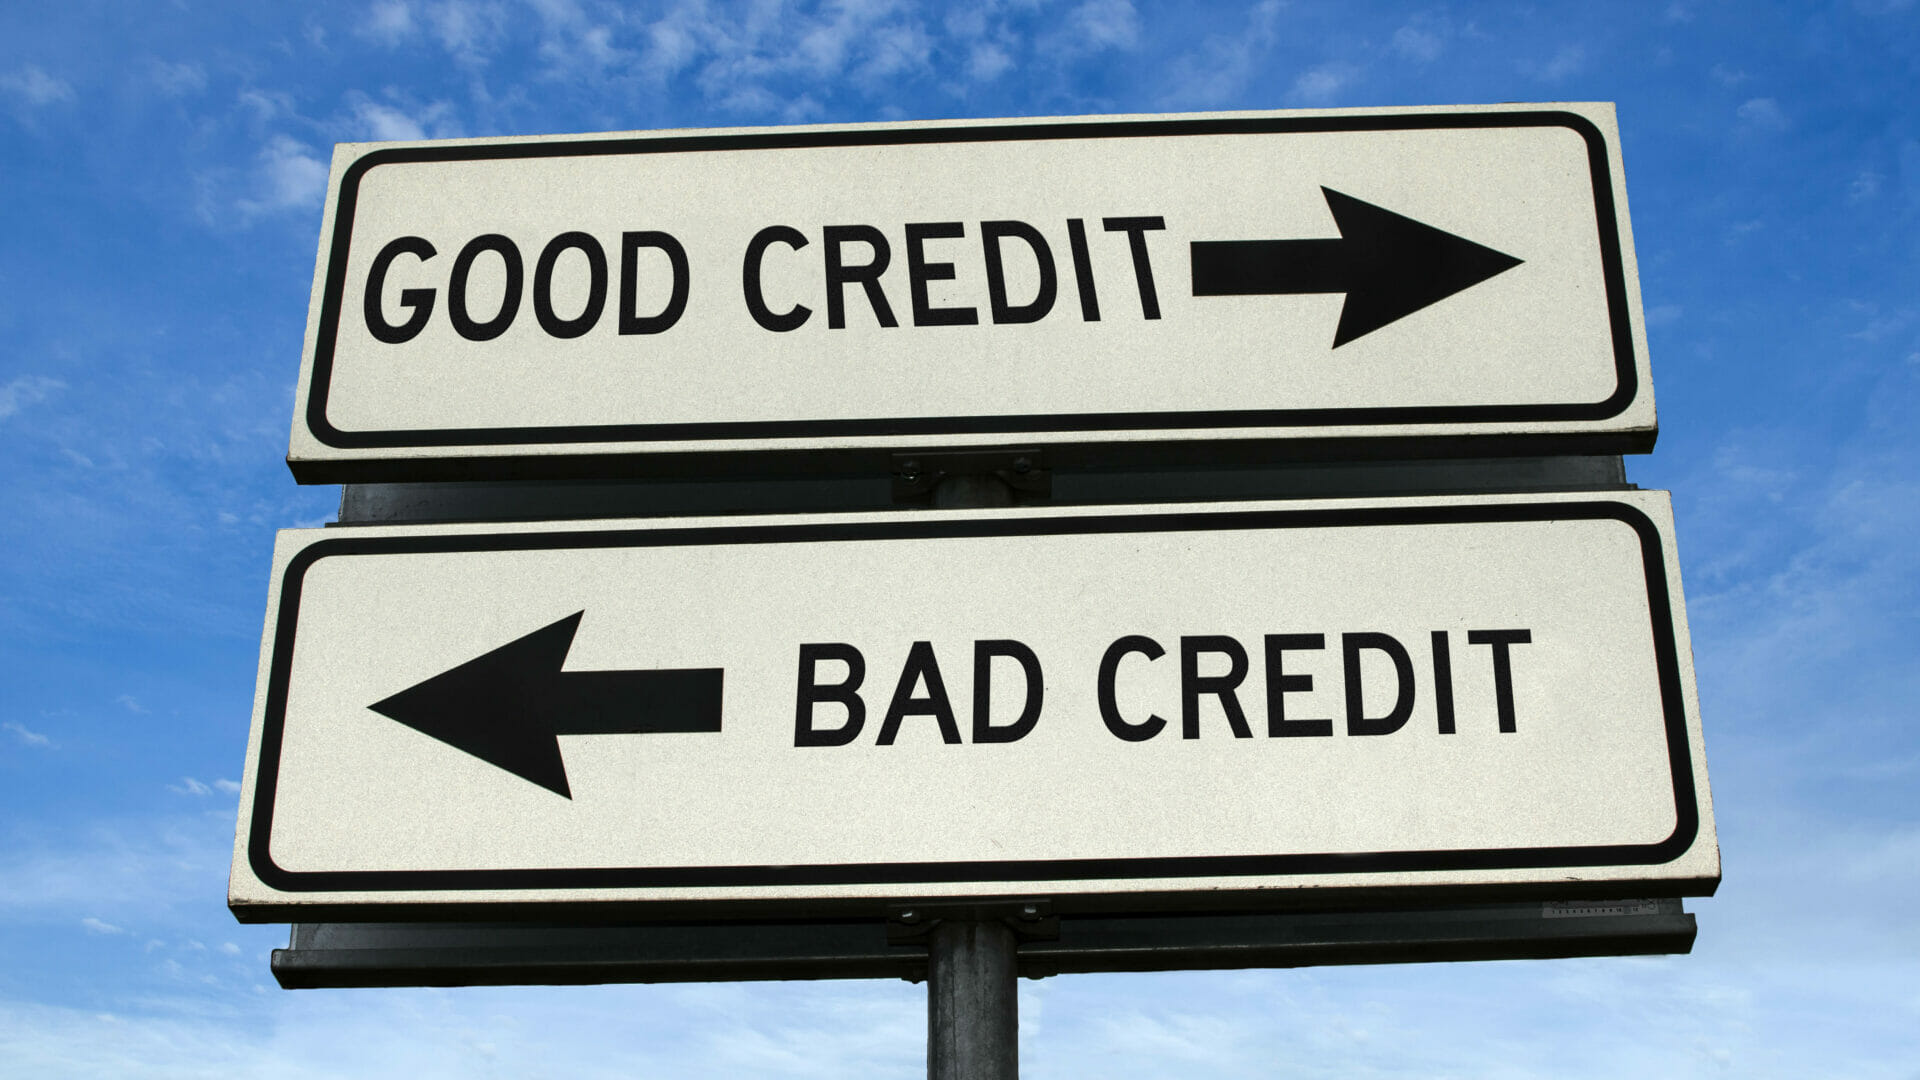 Good credit and bad credit road sign